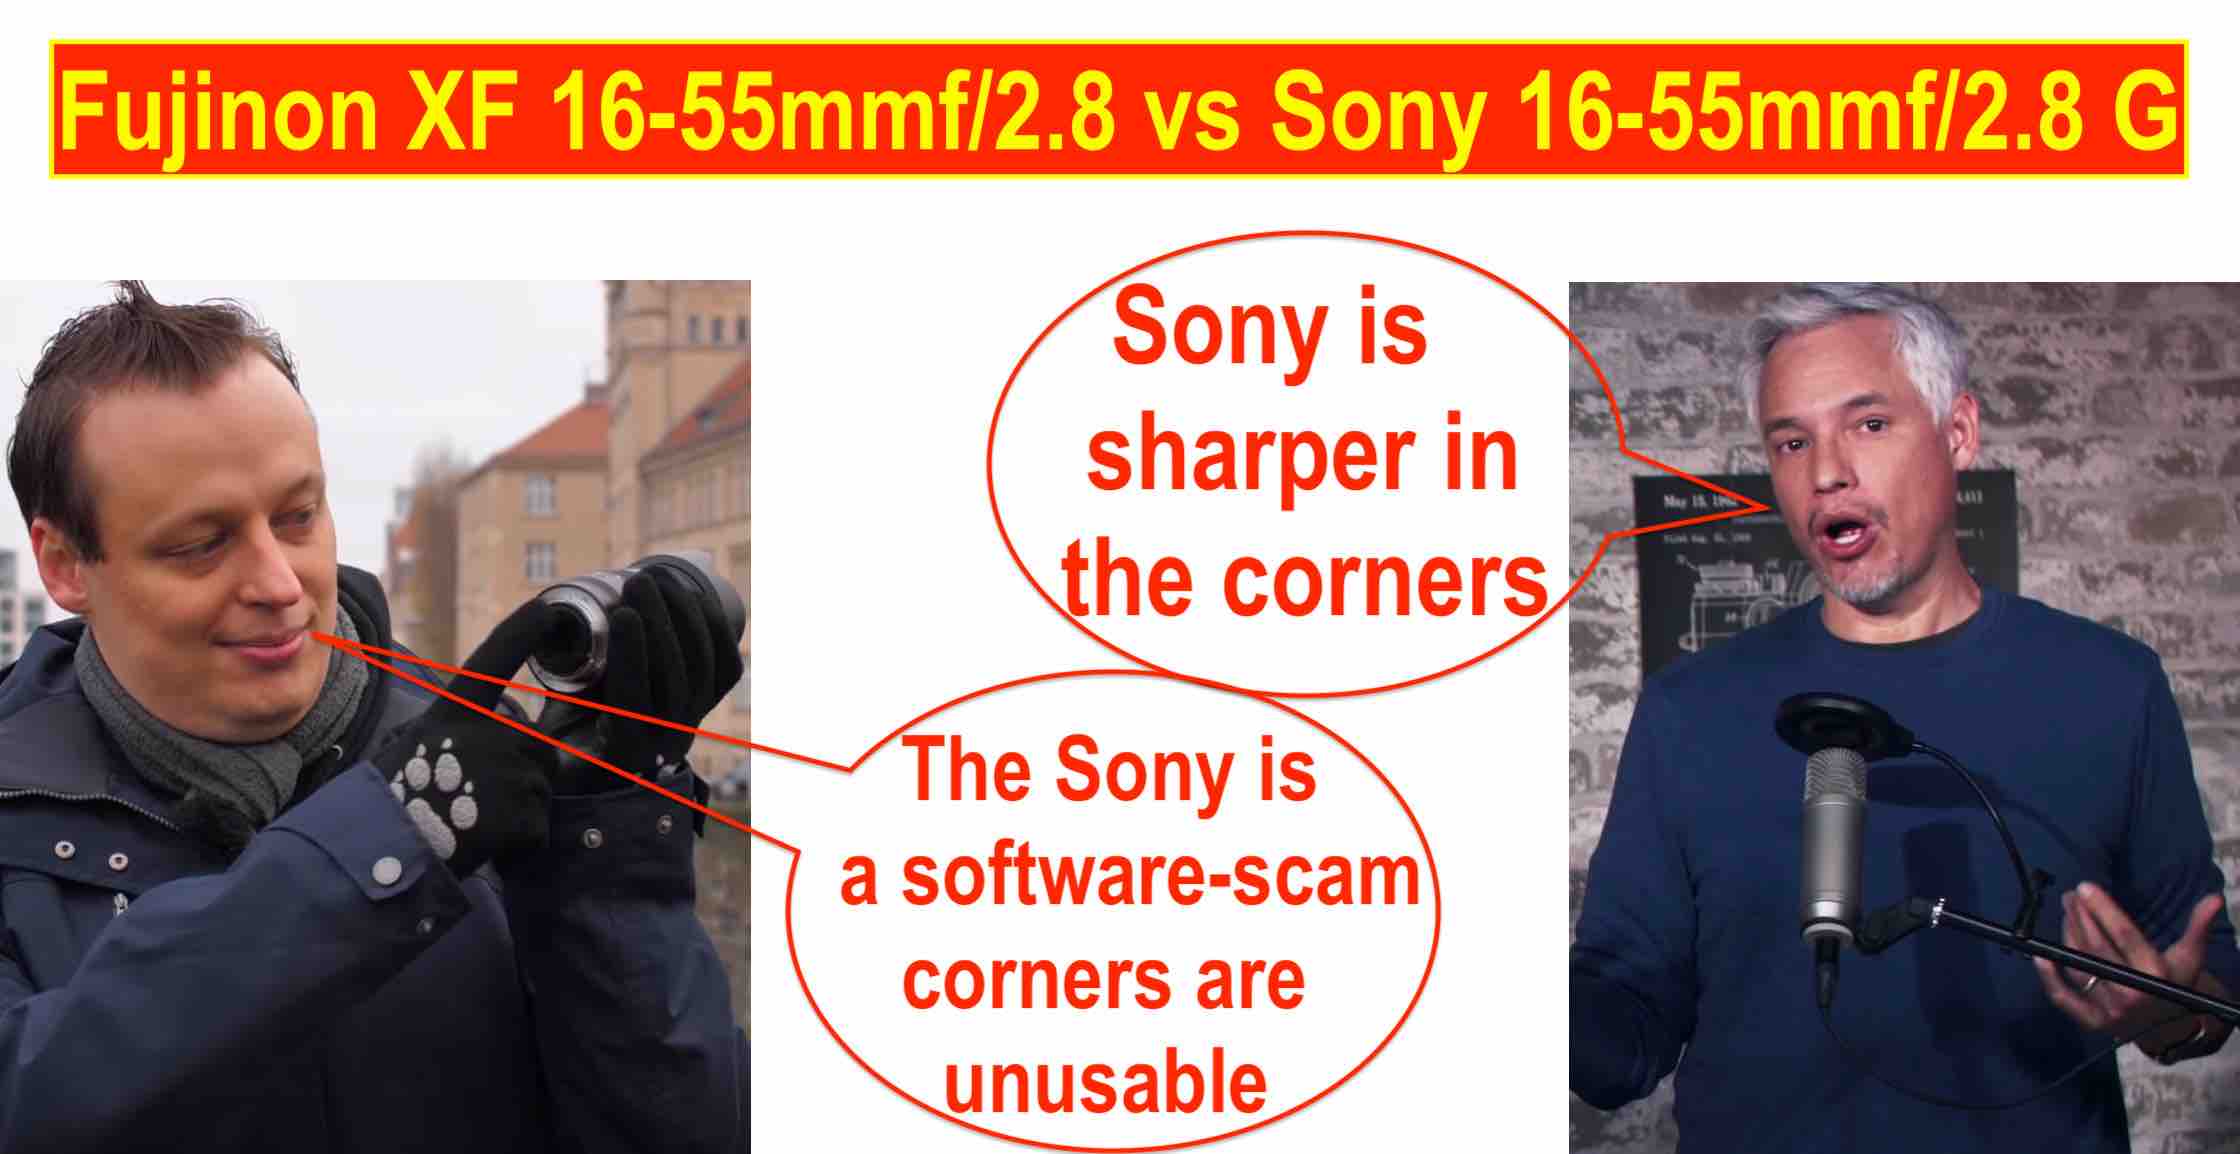 Fujinon 16 55 2 8 Vs Sony 16 55 2 8 Tony Loves Sony S Corner Performance Others Hate It And Why The Fujinon Is Bigger Fuji Rumors